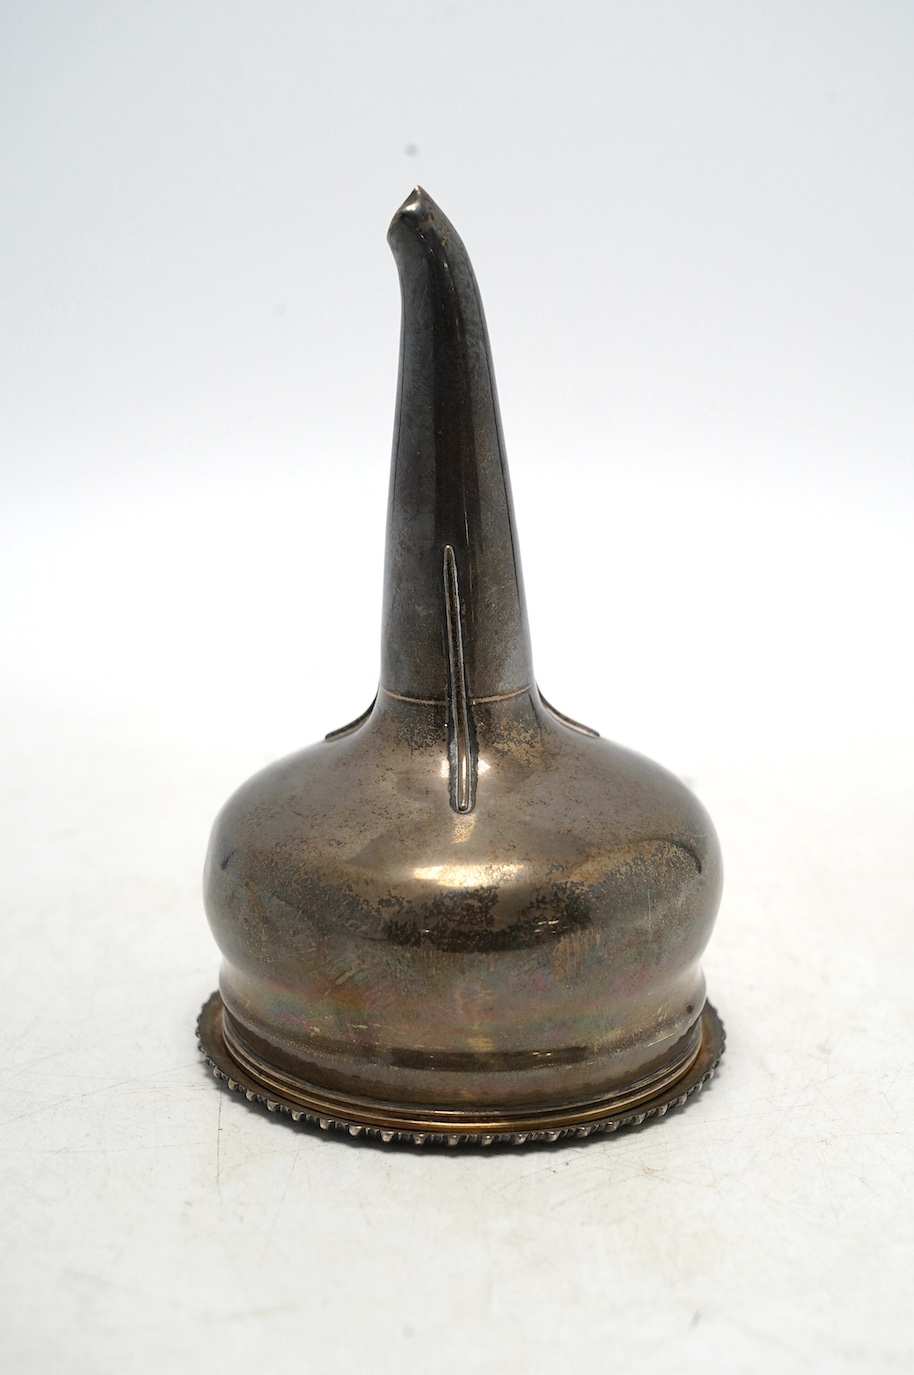 A George IV silver wine funnel, maker's mark rubbed, London, 1823, 13.2cm, 4.7oz. Condition - fair